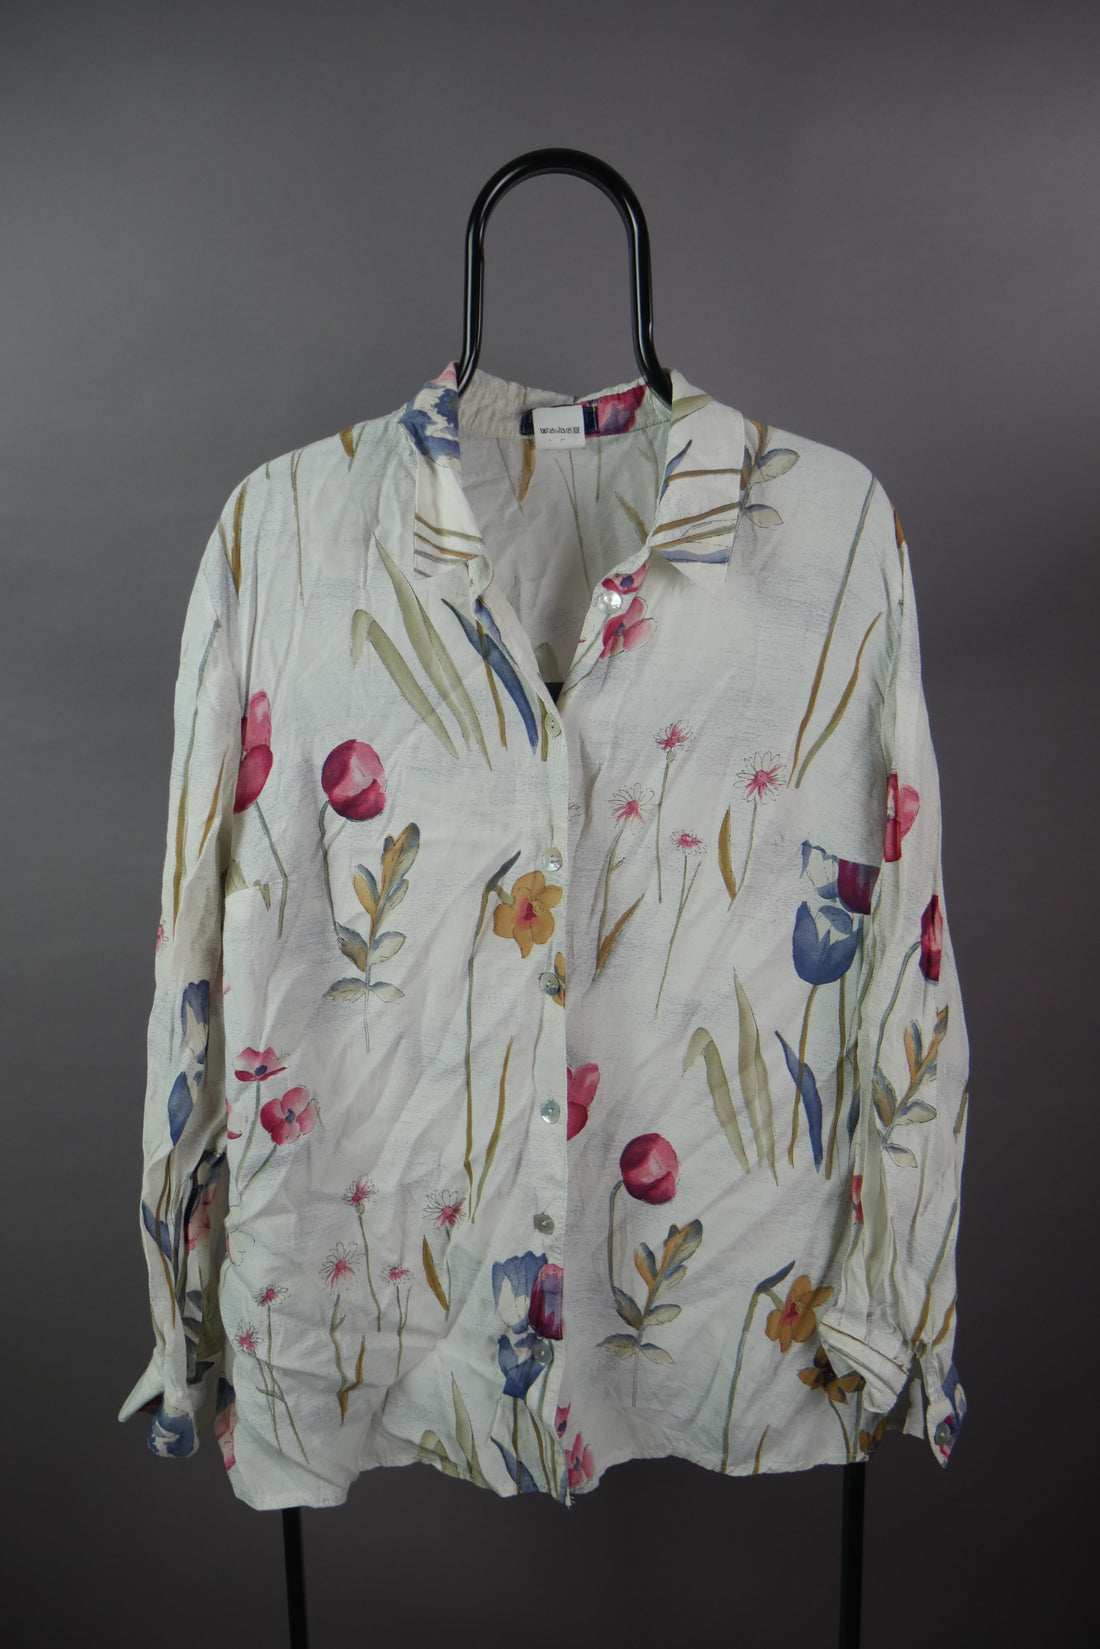 The Vintage Flower Print Shirt (Women's M)